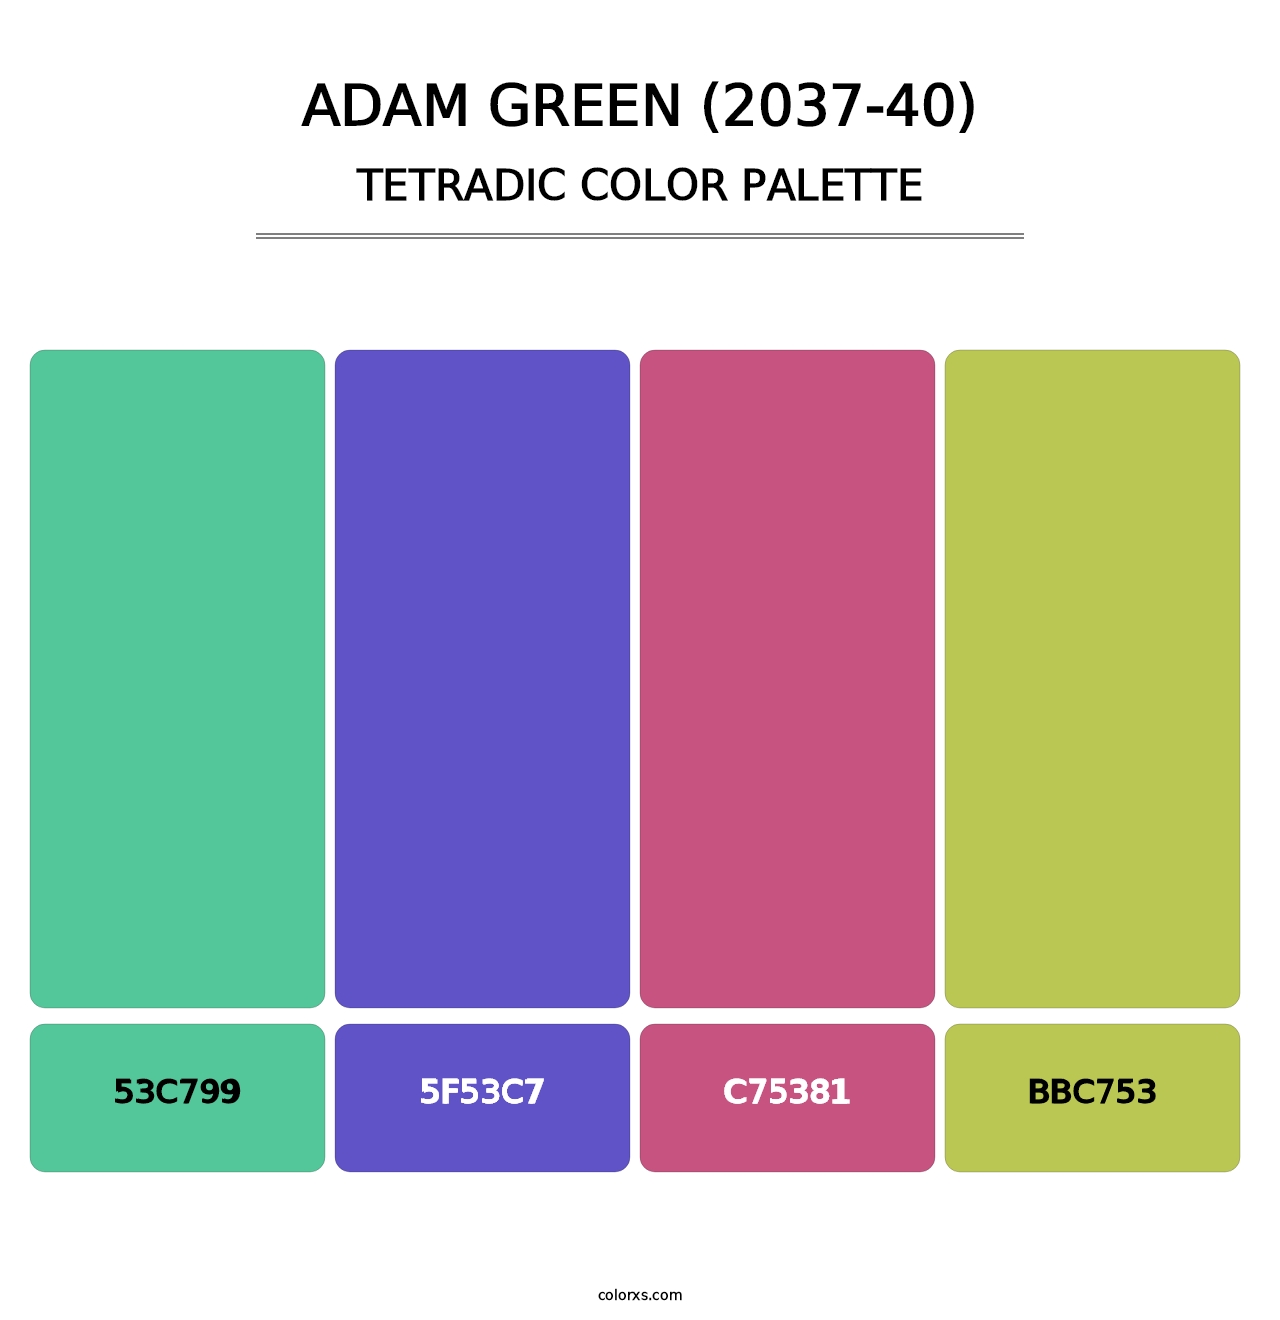 Adam Green (2037-40) - Tetradic Color Palette